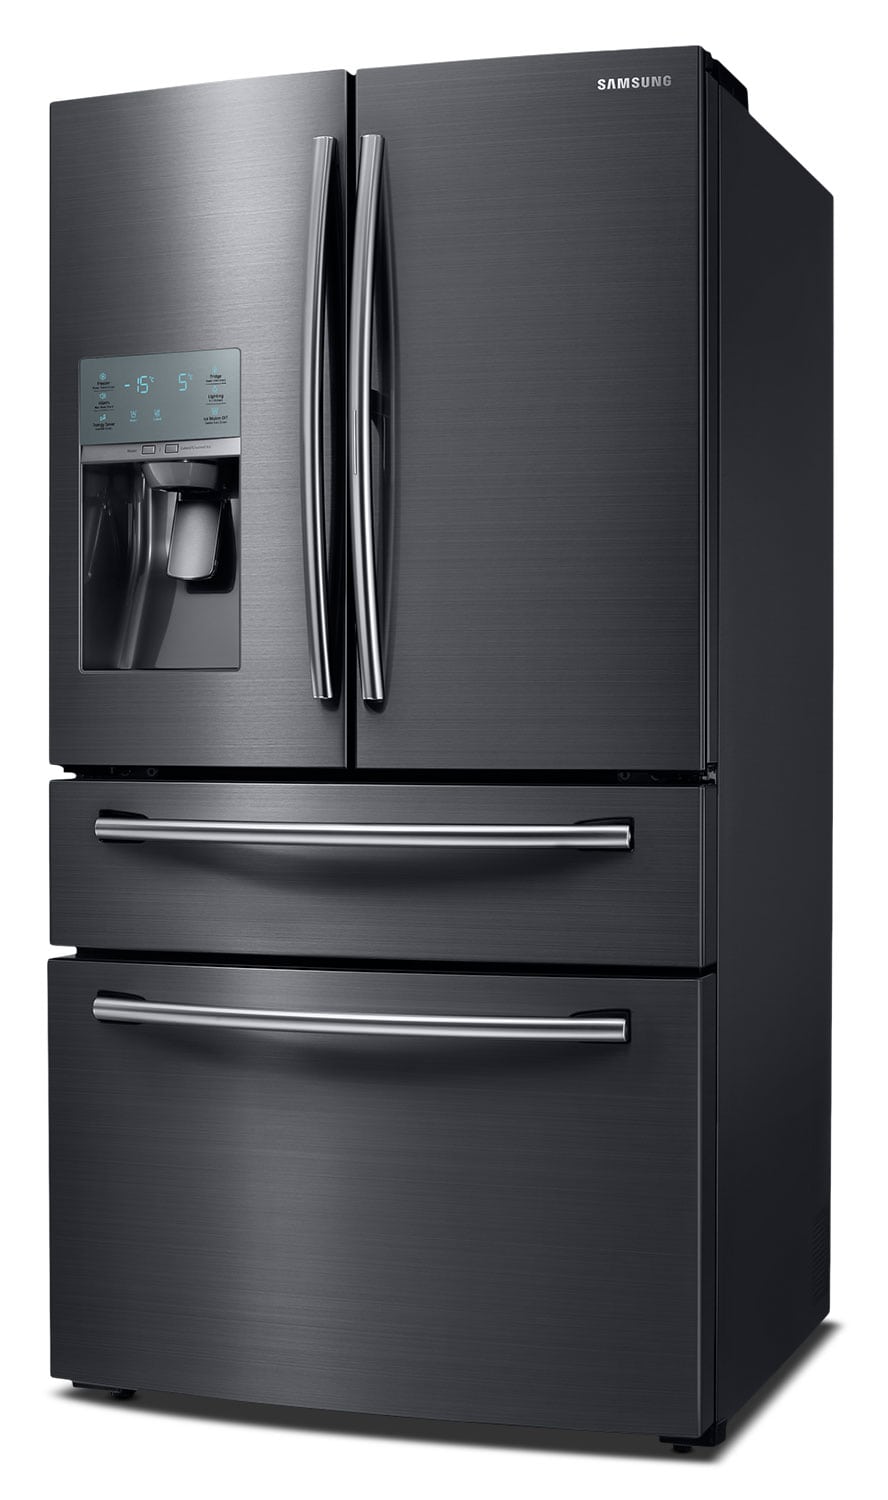 Samsung 27.8 Cu. Ft. French-Door Refrigerator – Black Stainless Steel Black Stainless Steel Refrigerator Samsung